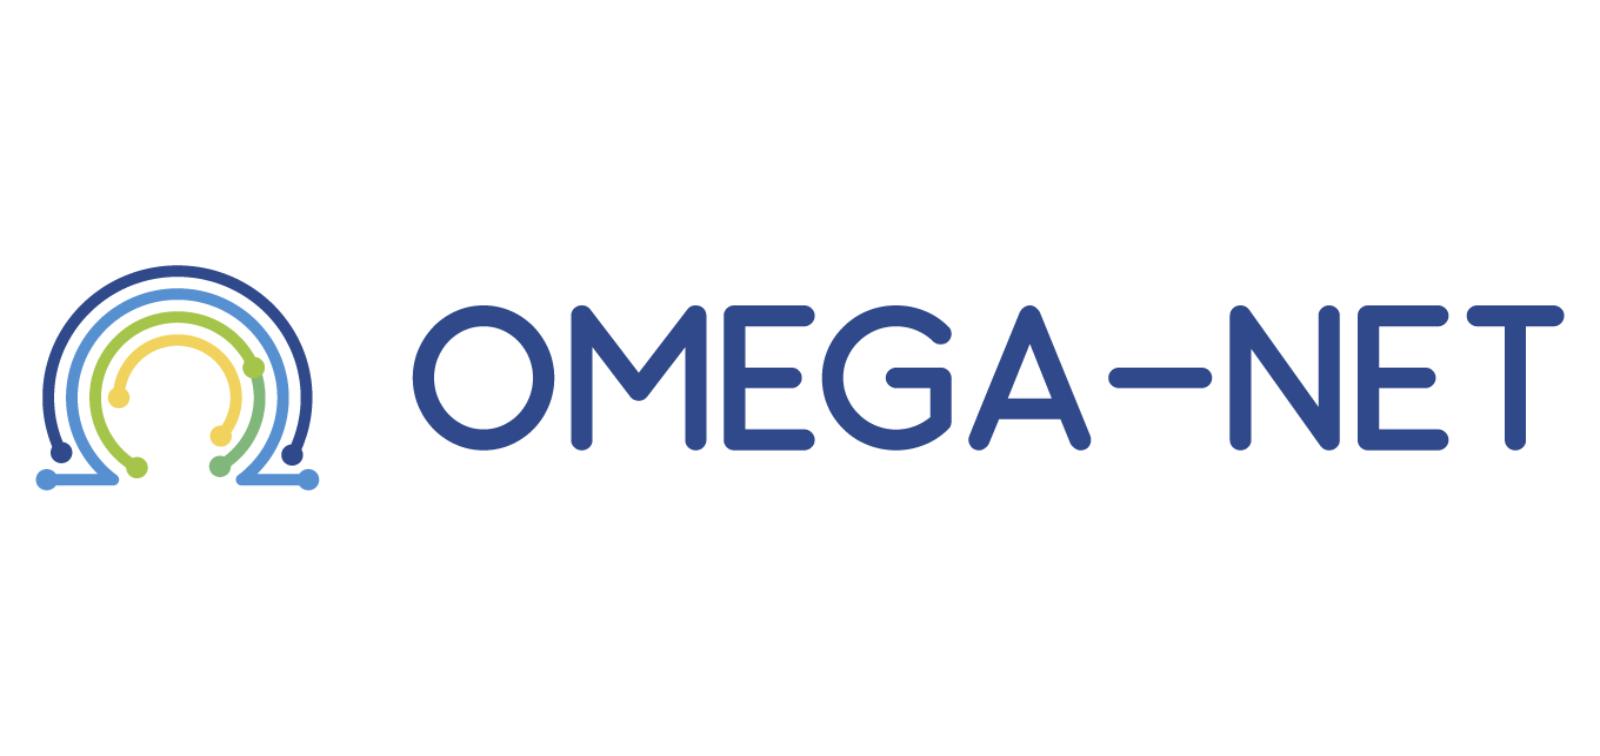 OMEGA-NET project logo